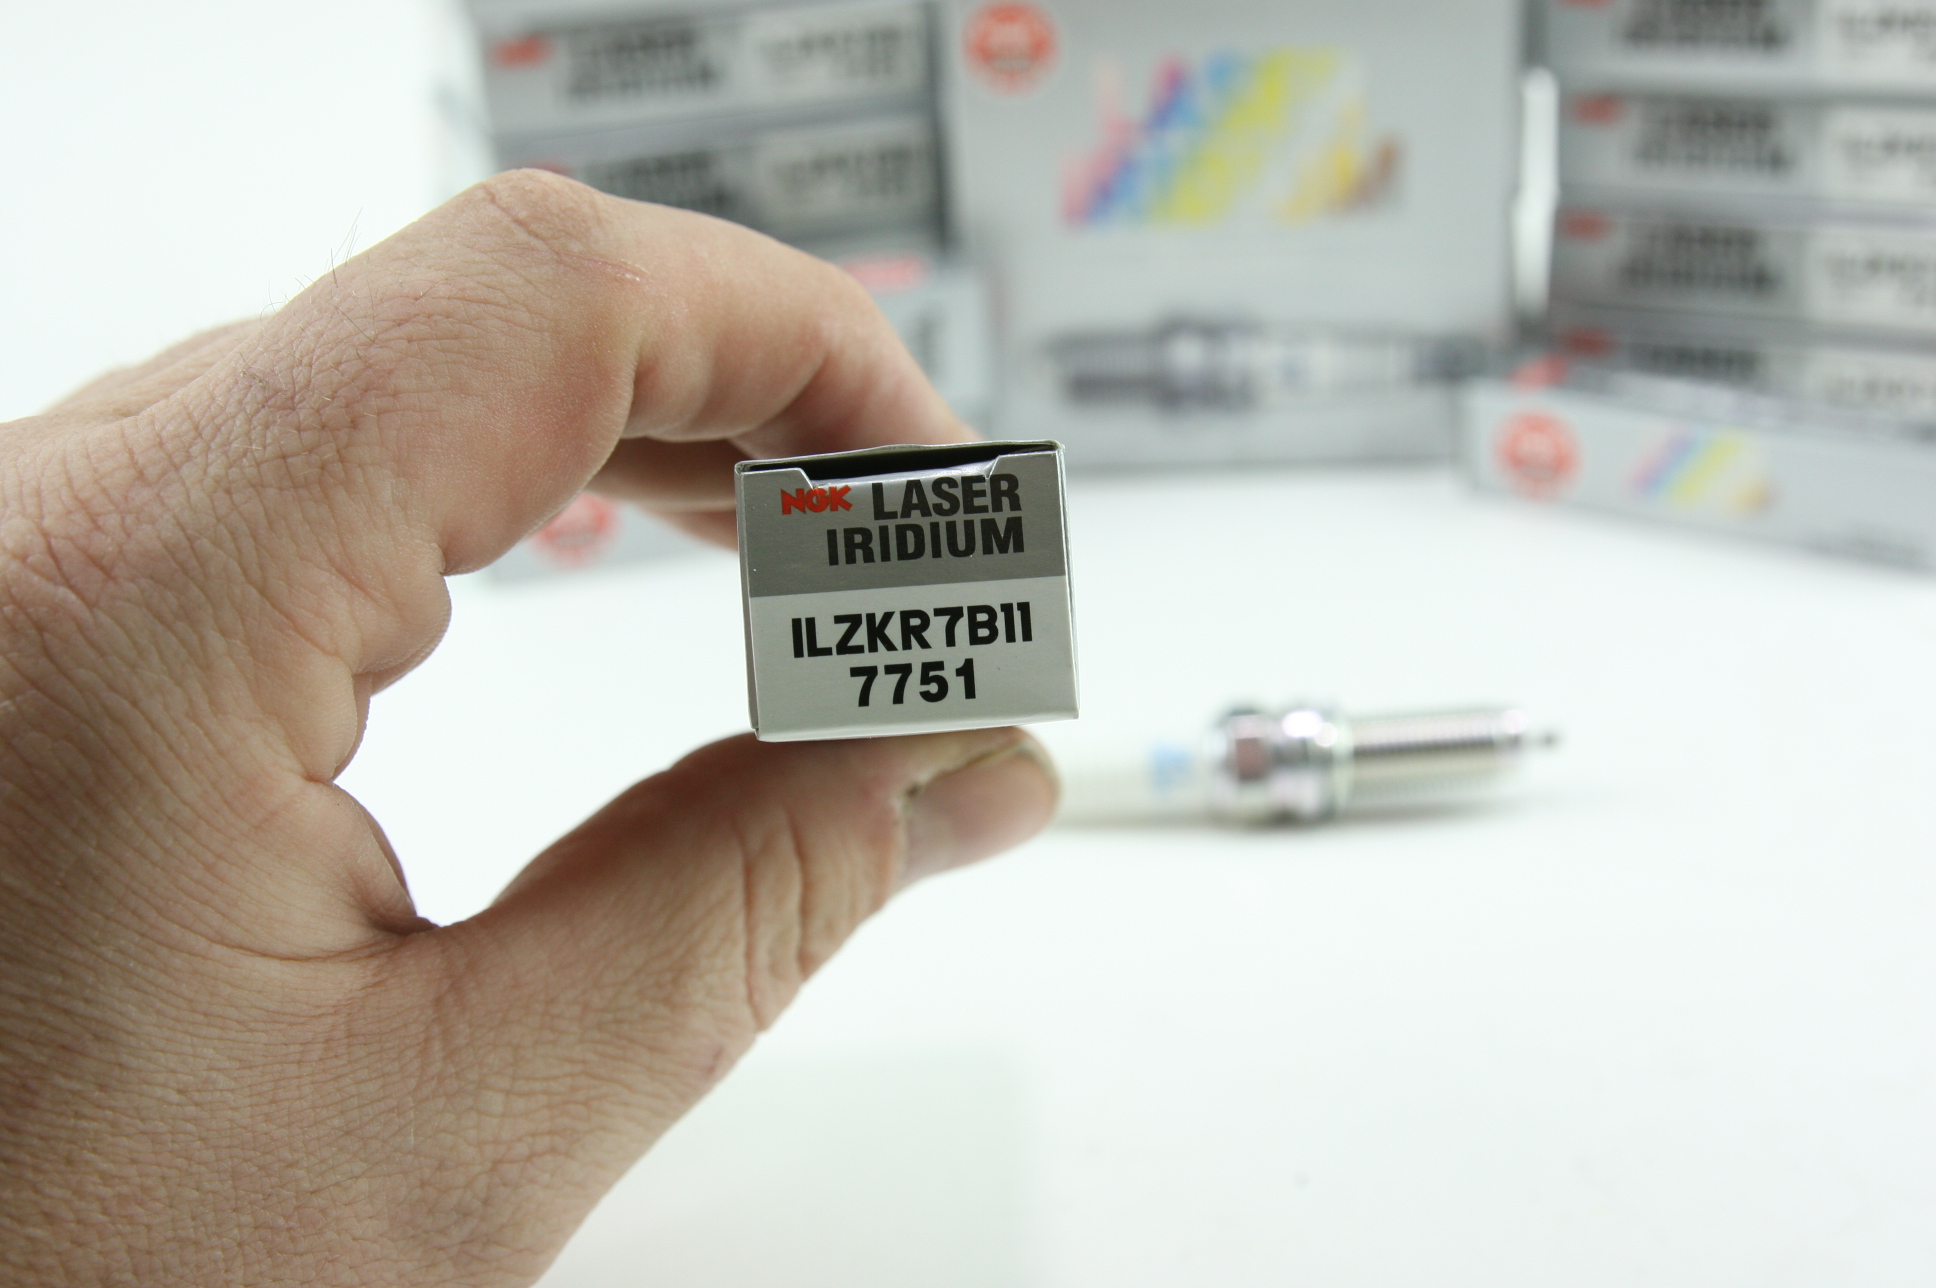 New Set of 120 (Case) NGK 7751 ILZKR7B11 Laser Iridium and Platinum Spark Plugs - image 2